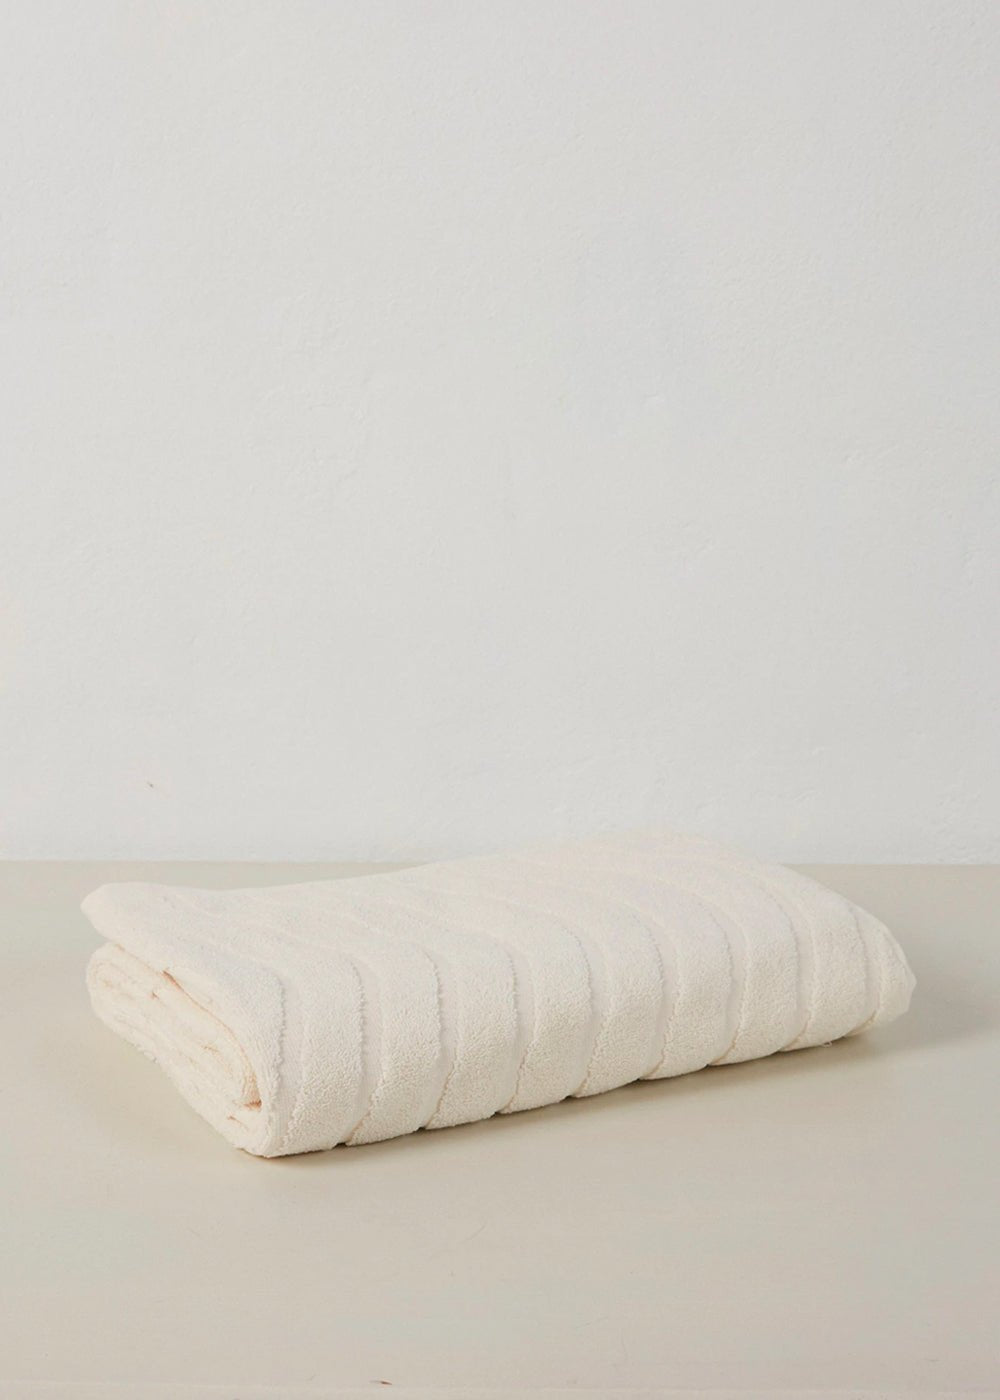 Ivory St Clair Bath Towel